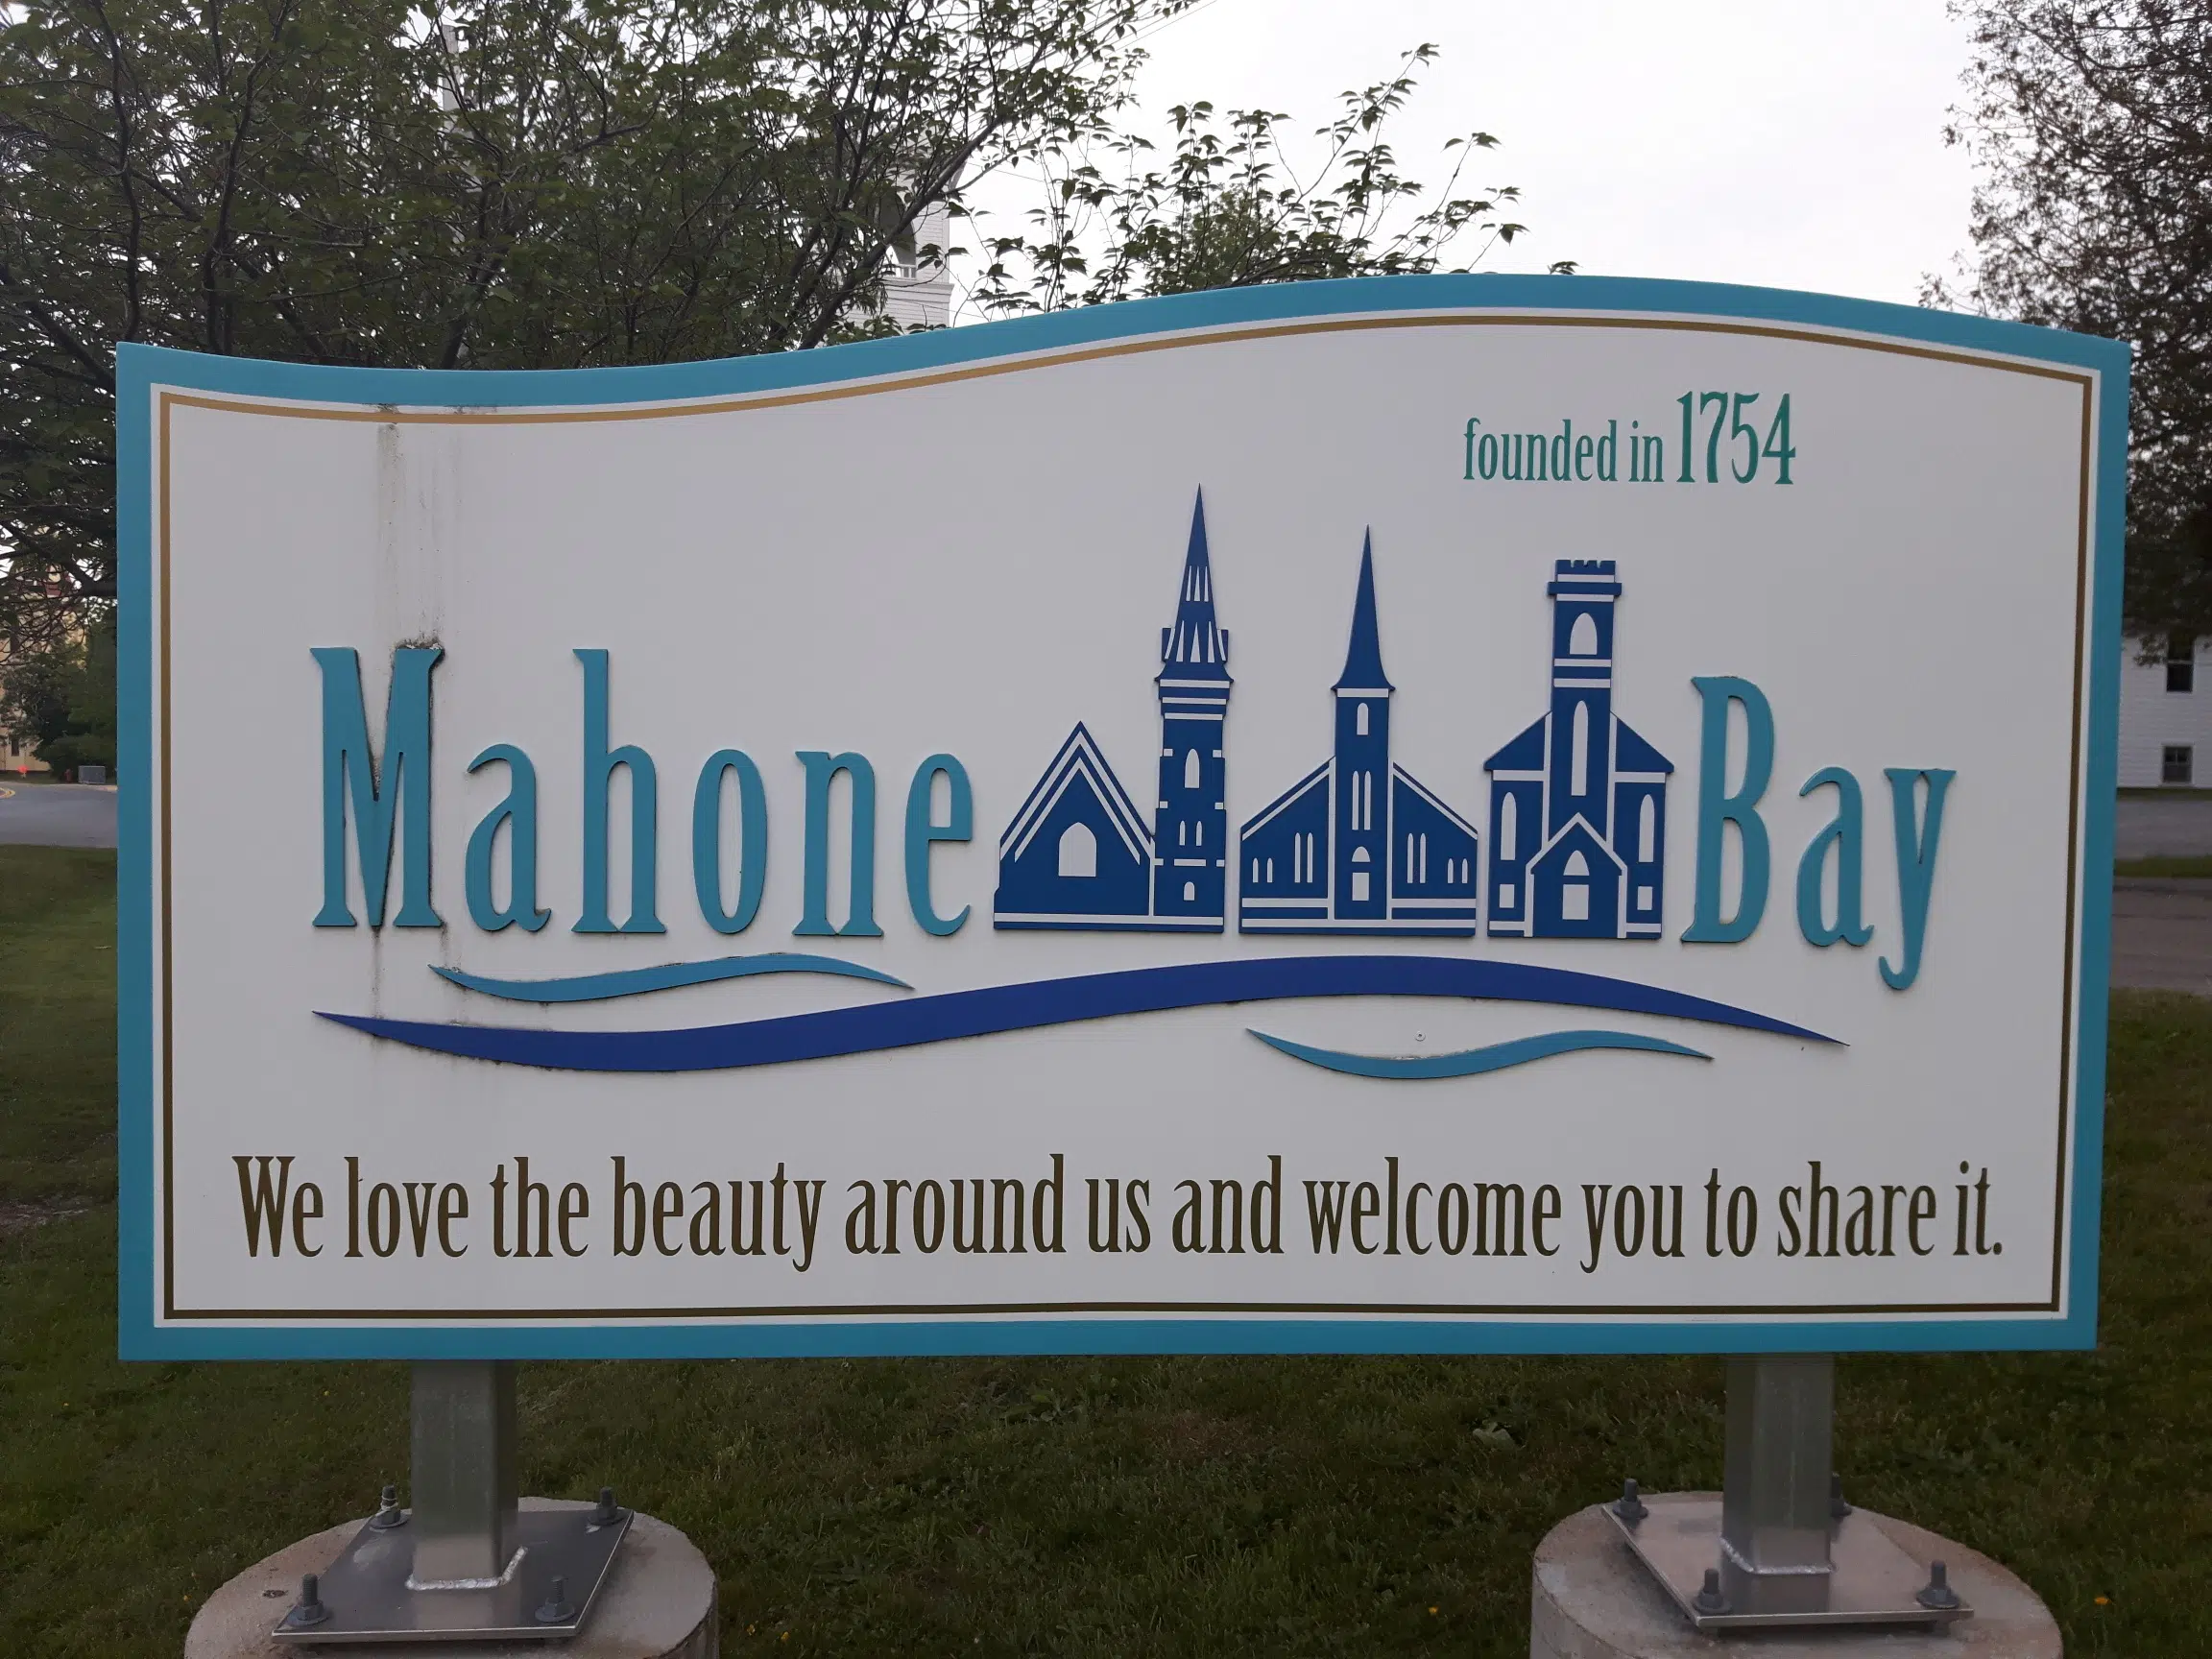 Mahone Bay Native Named New Town CAO